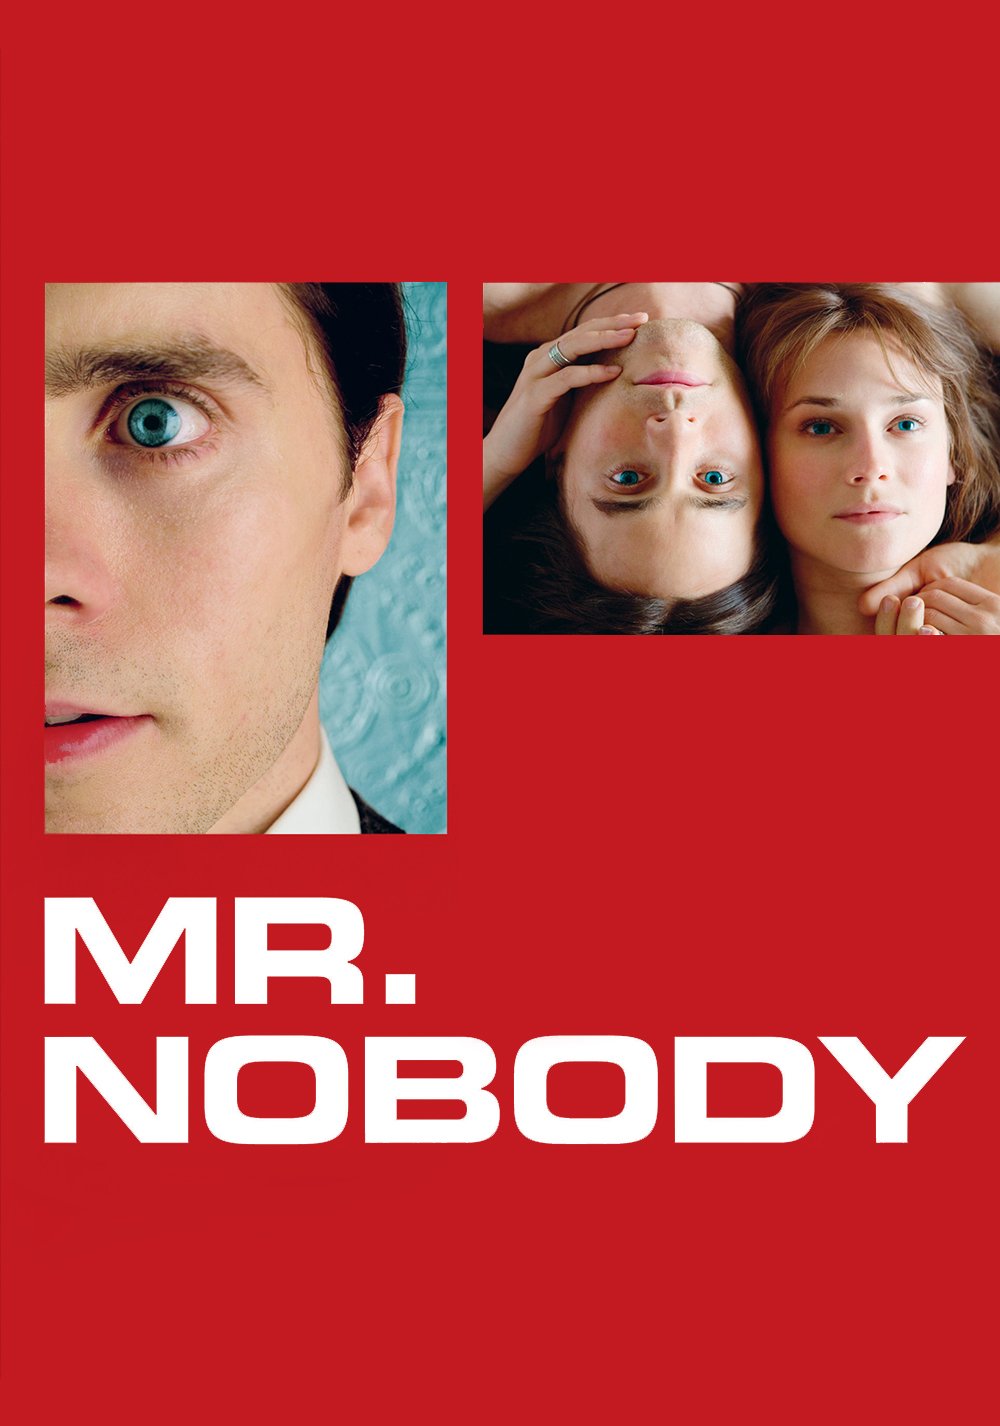 movie Mr. Nobody Image